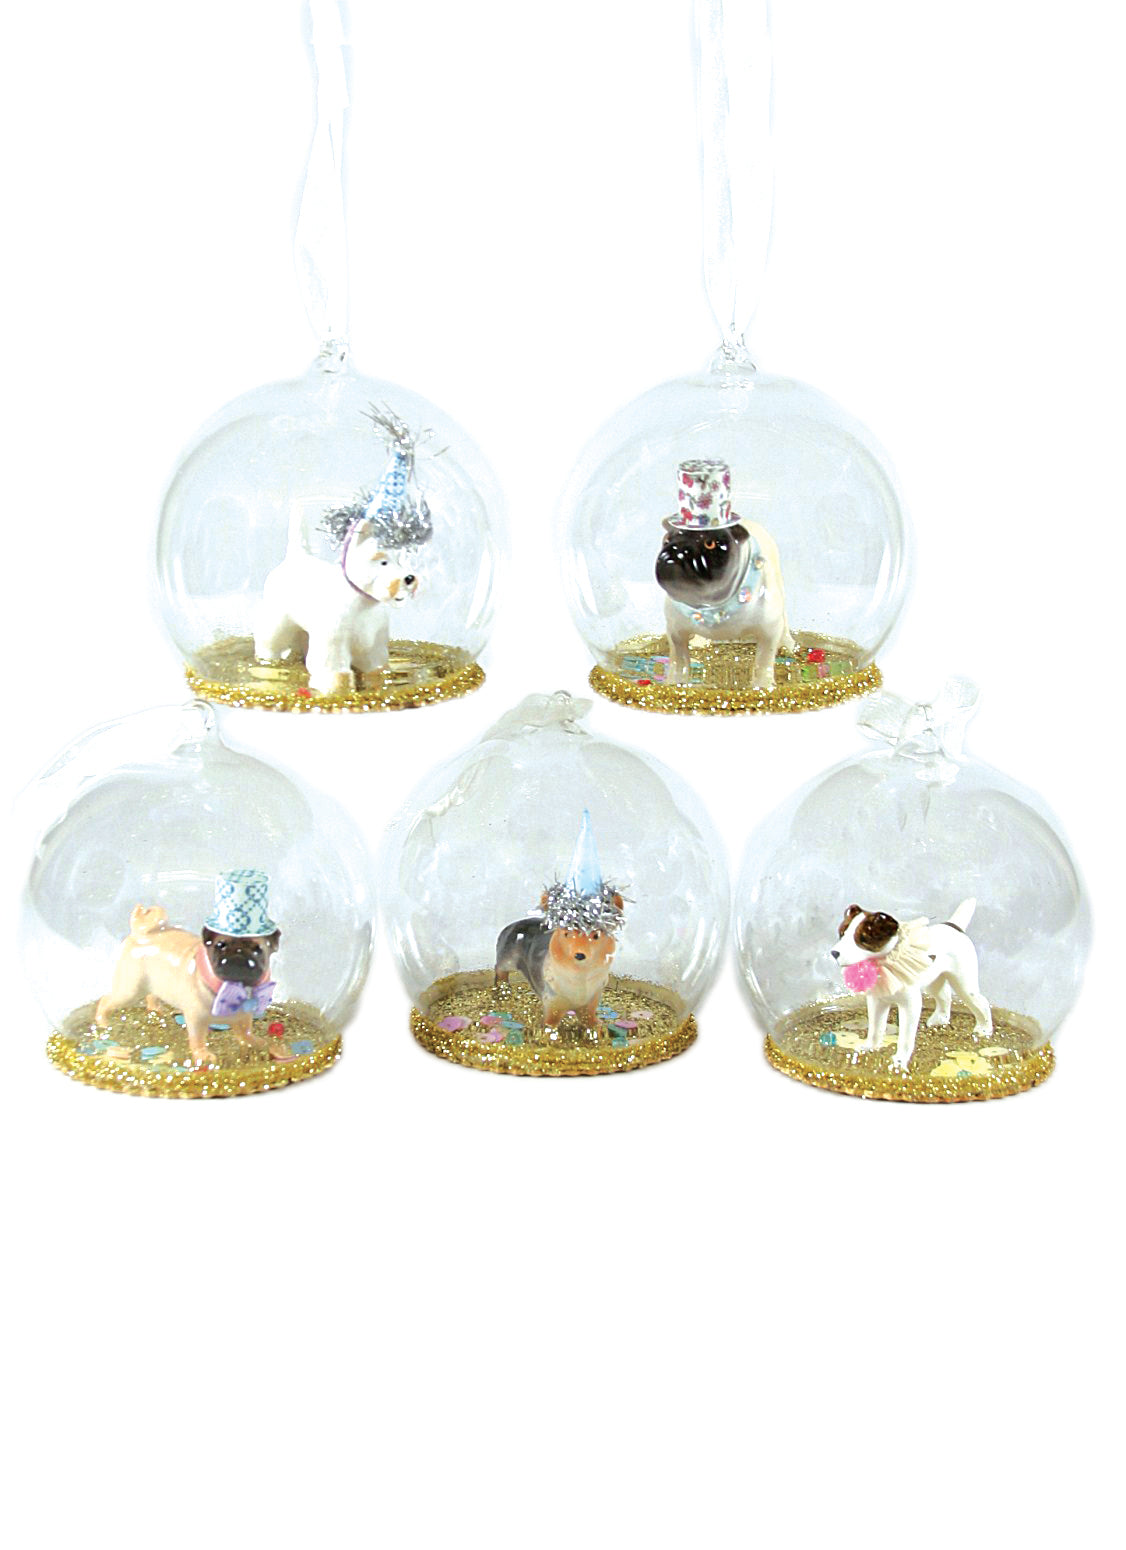 Foxie Dog Globe Ornament